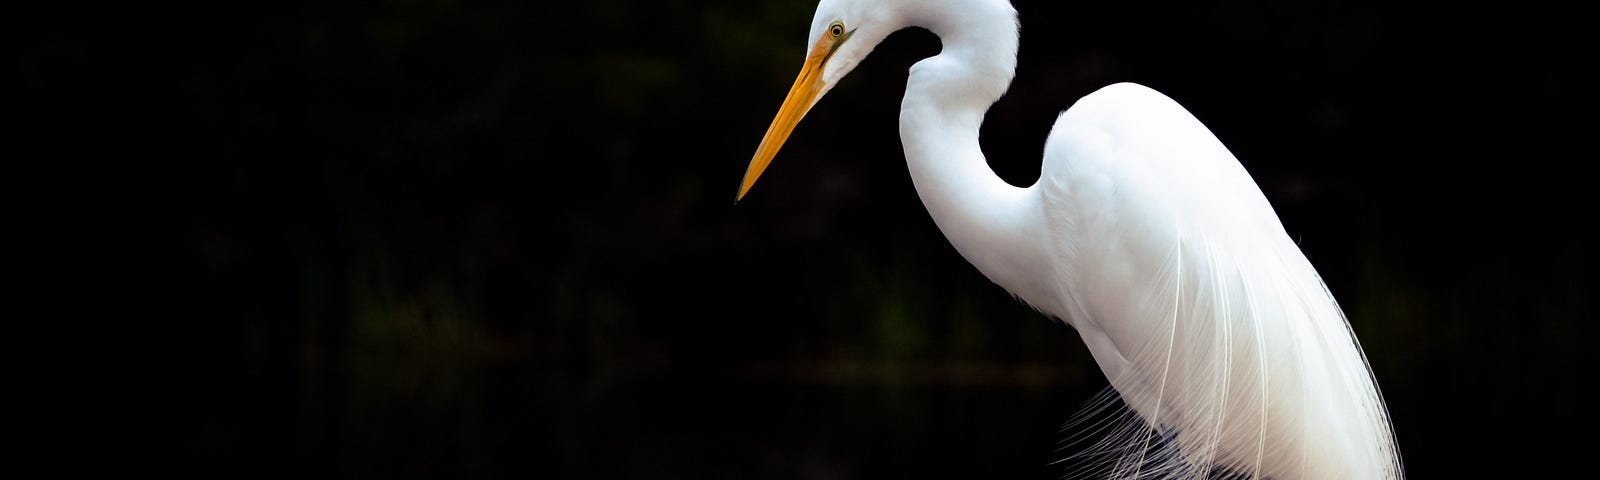 White heron against a black background.